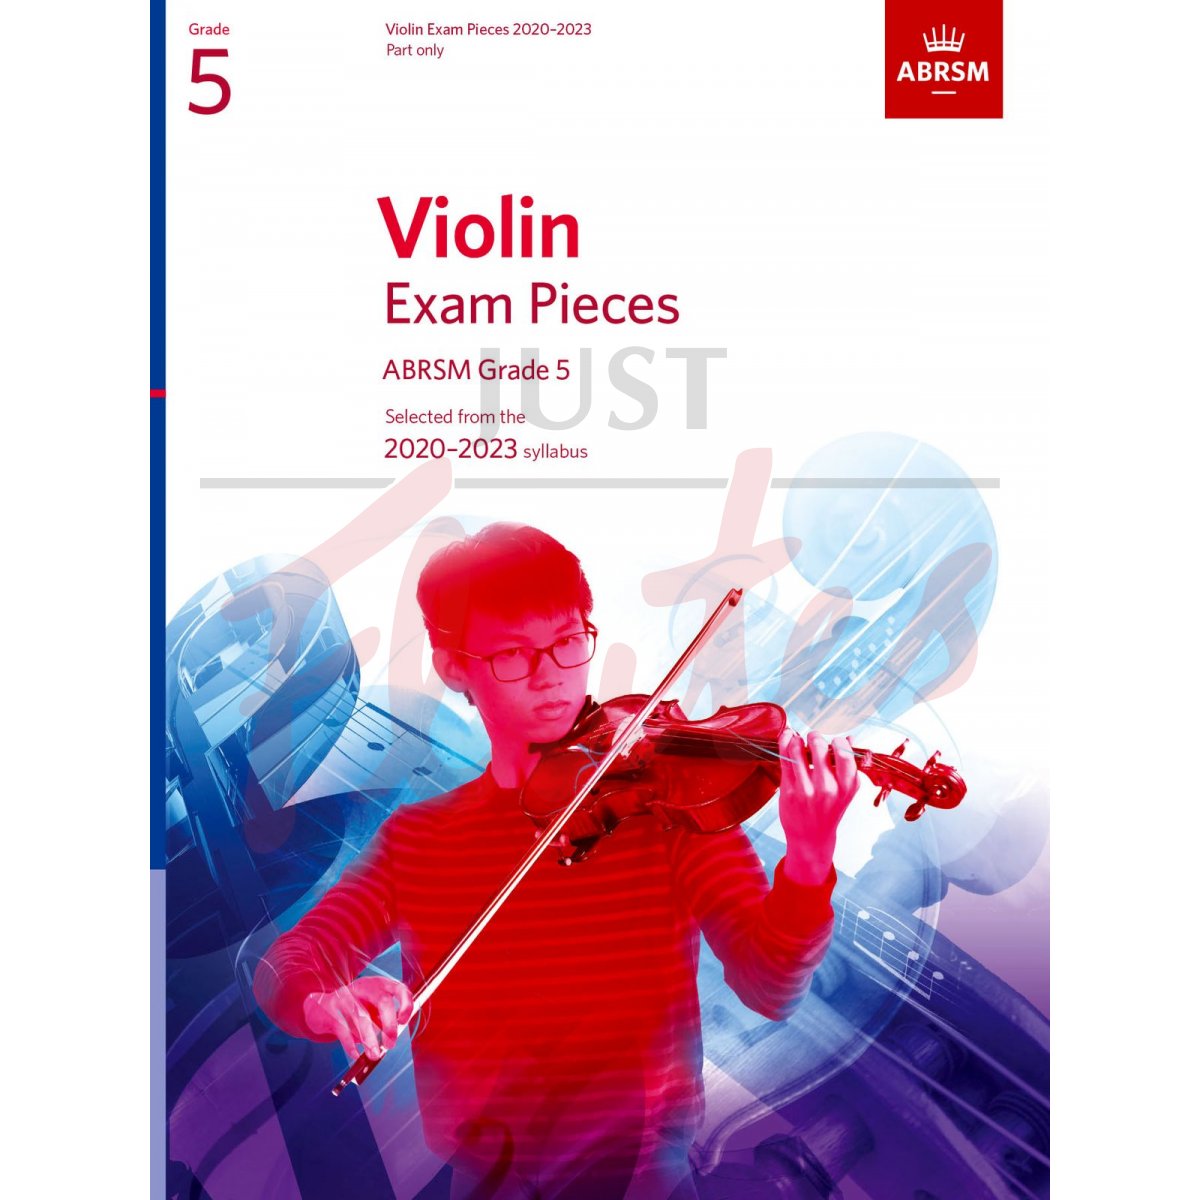 Violin Exam Pieces 2020-2023, Grade 5 [Part Only]